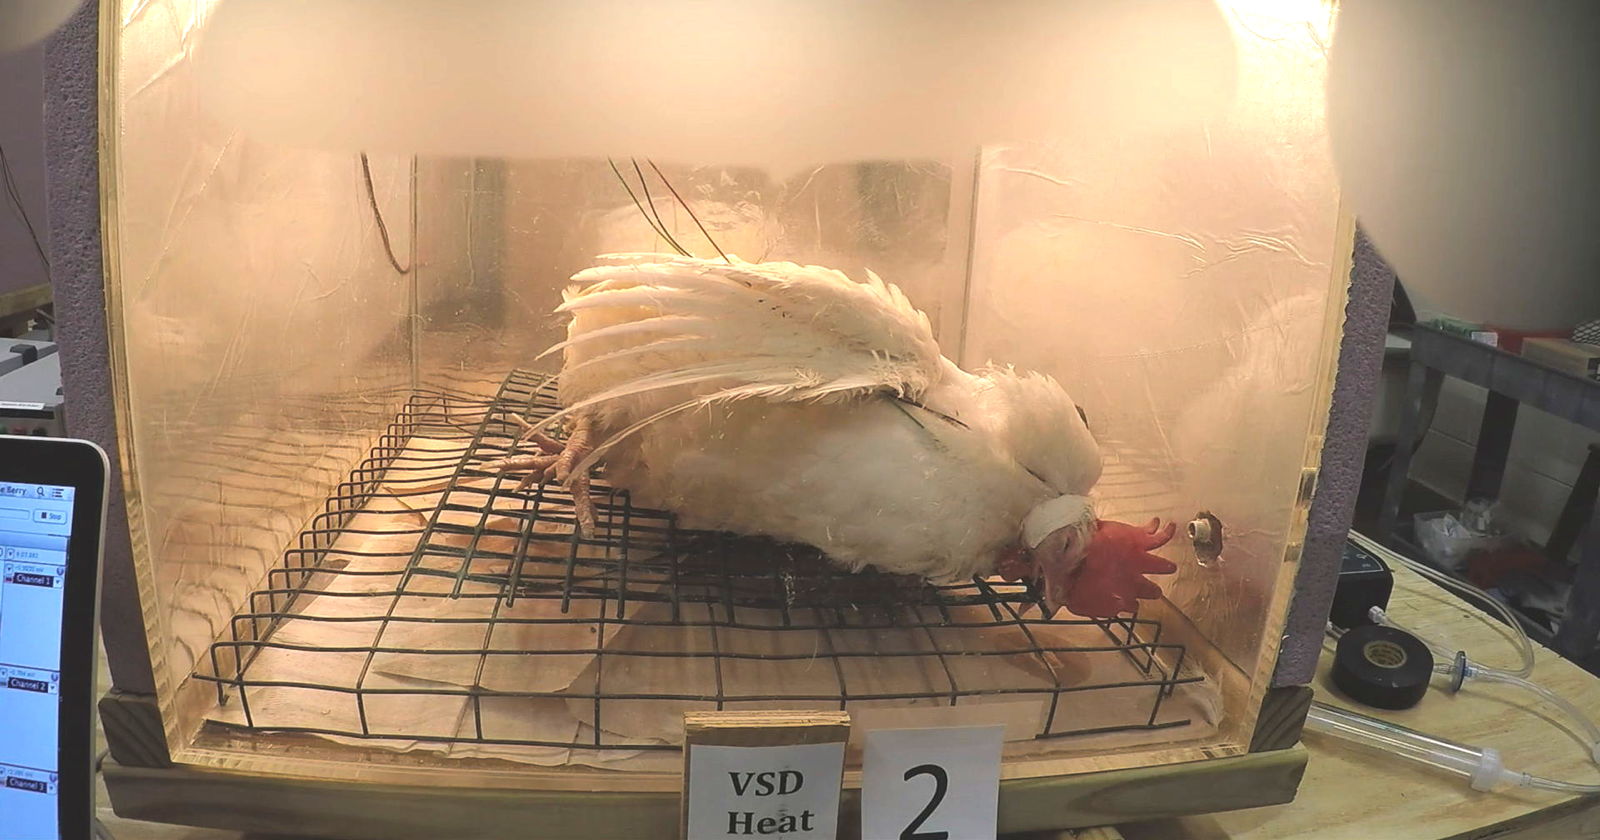 dead hen in cage under heat lamps